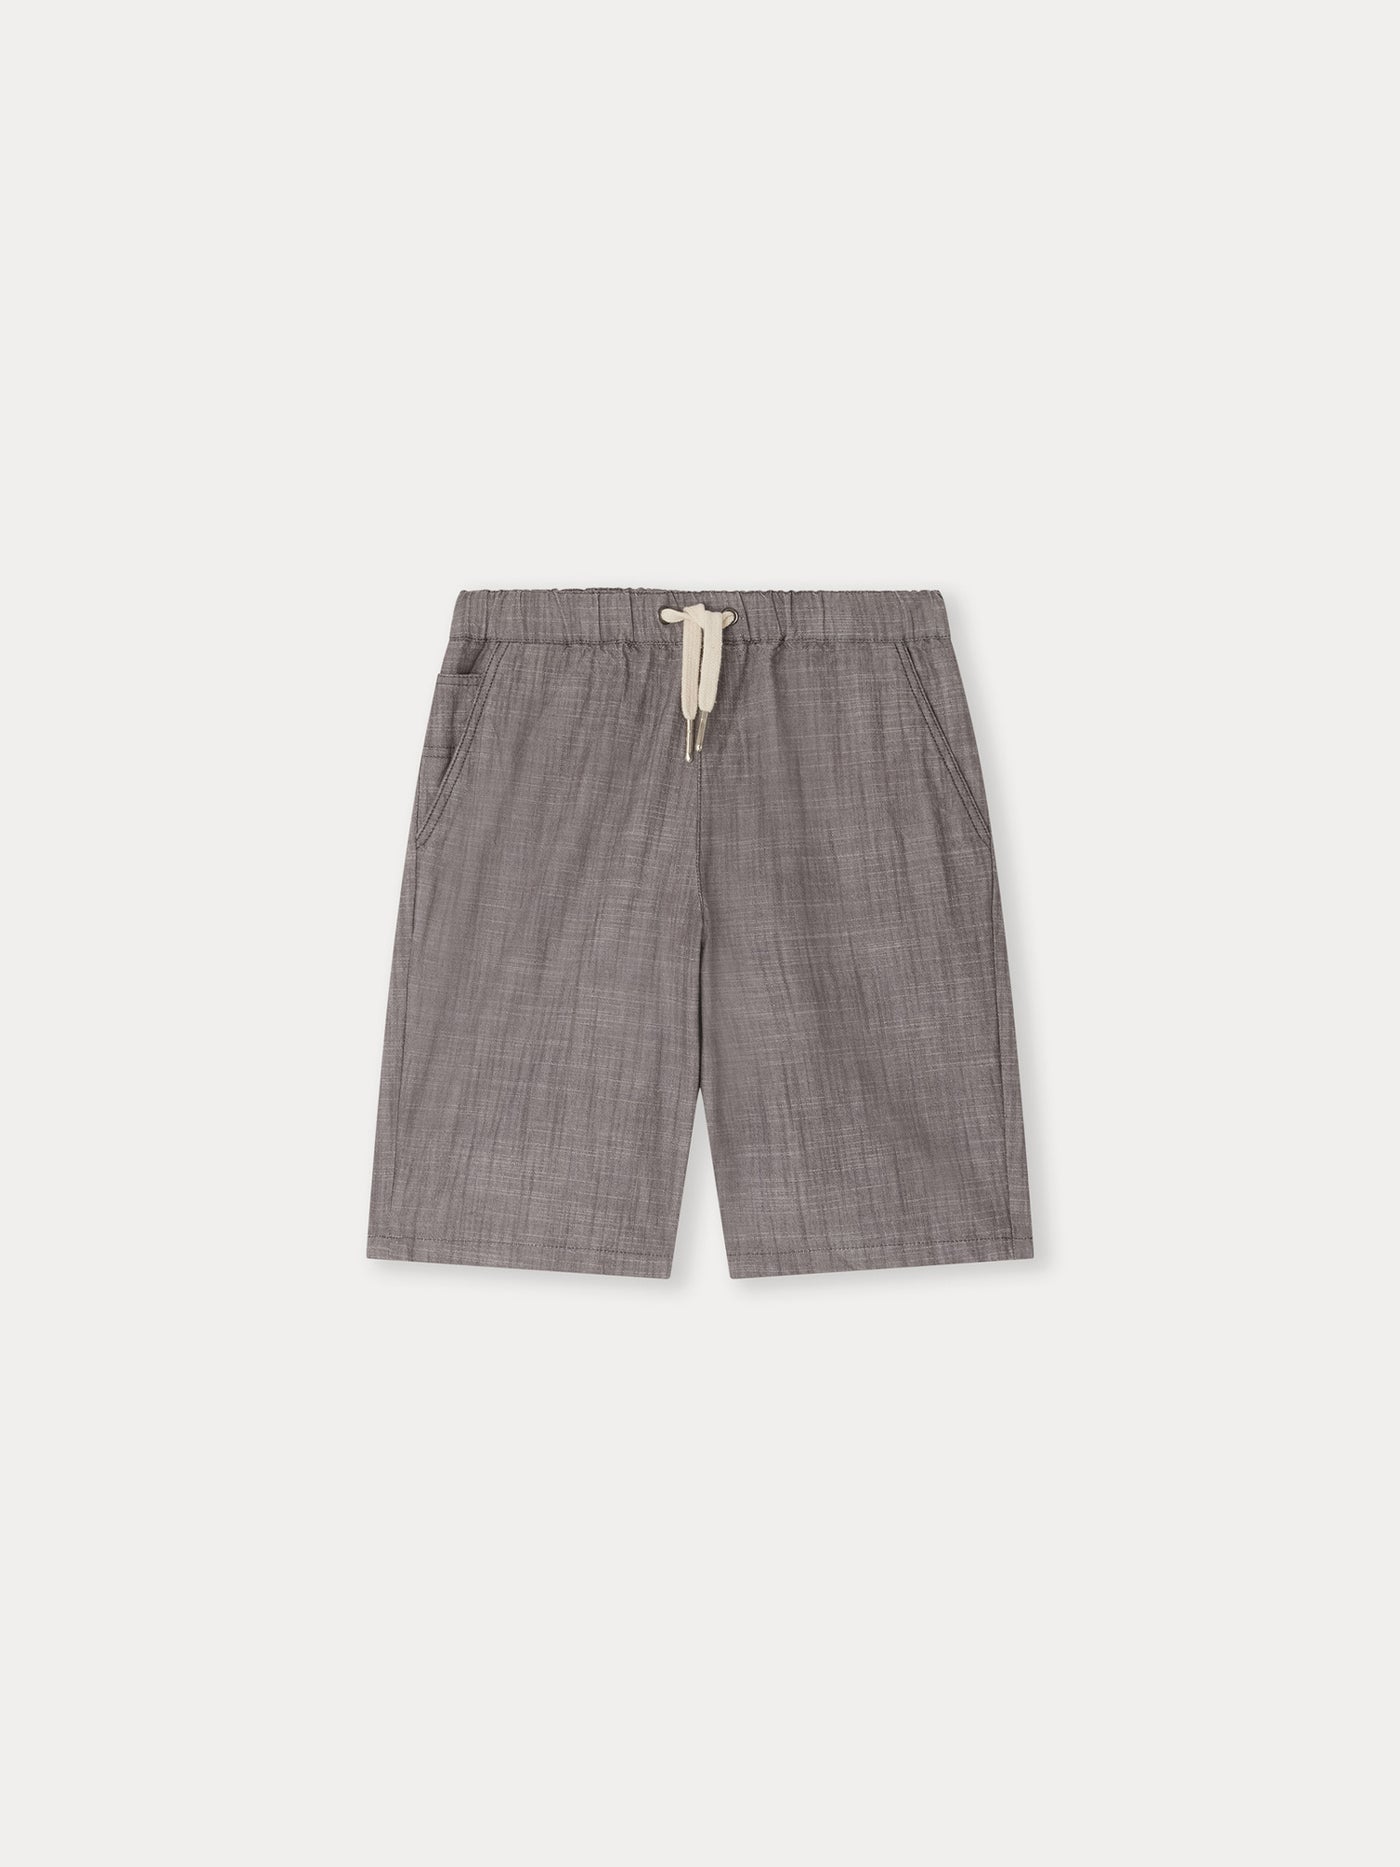 Conway Shorts slate gray